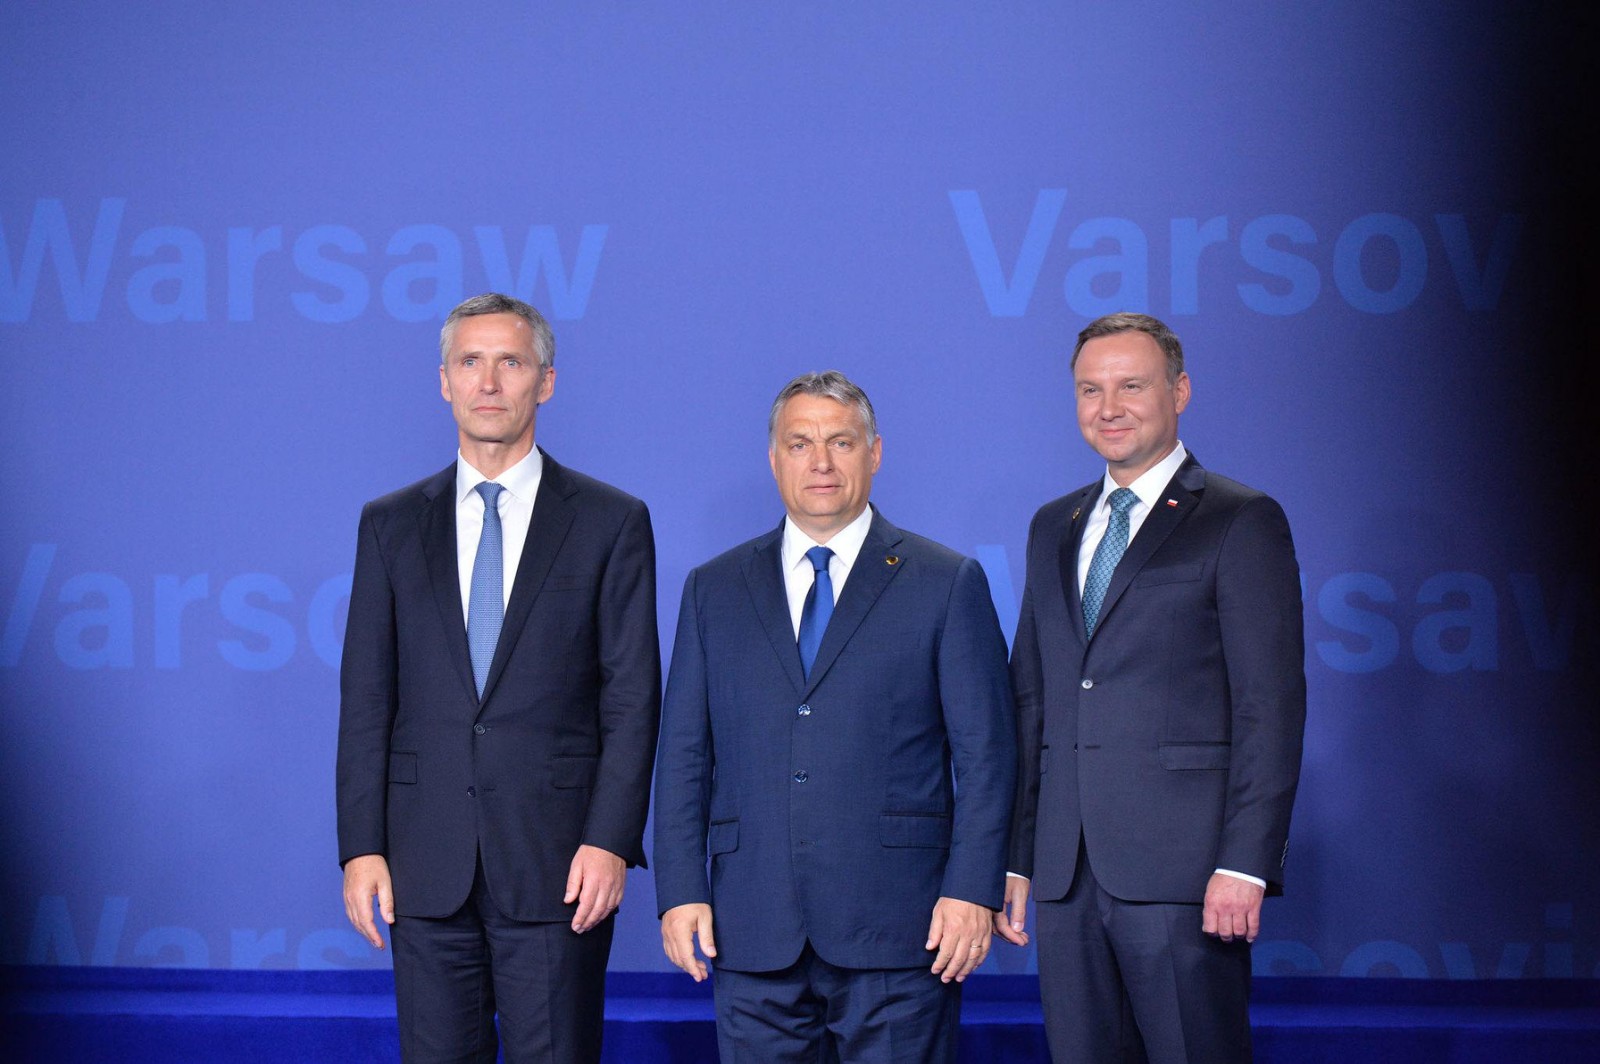 NATO - Viktor Orban